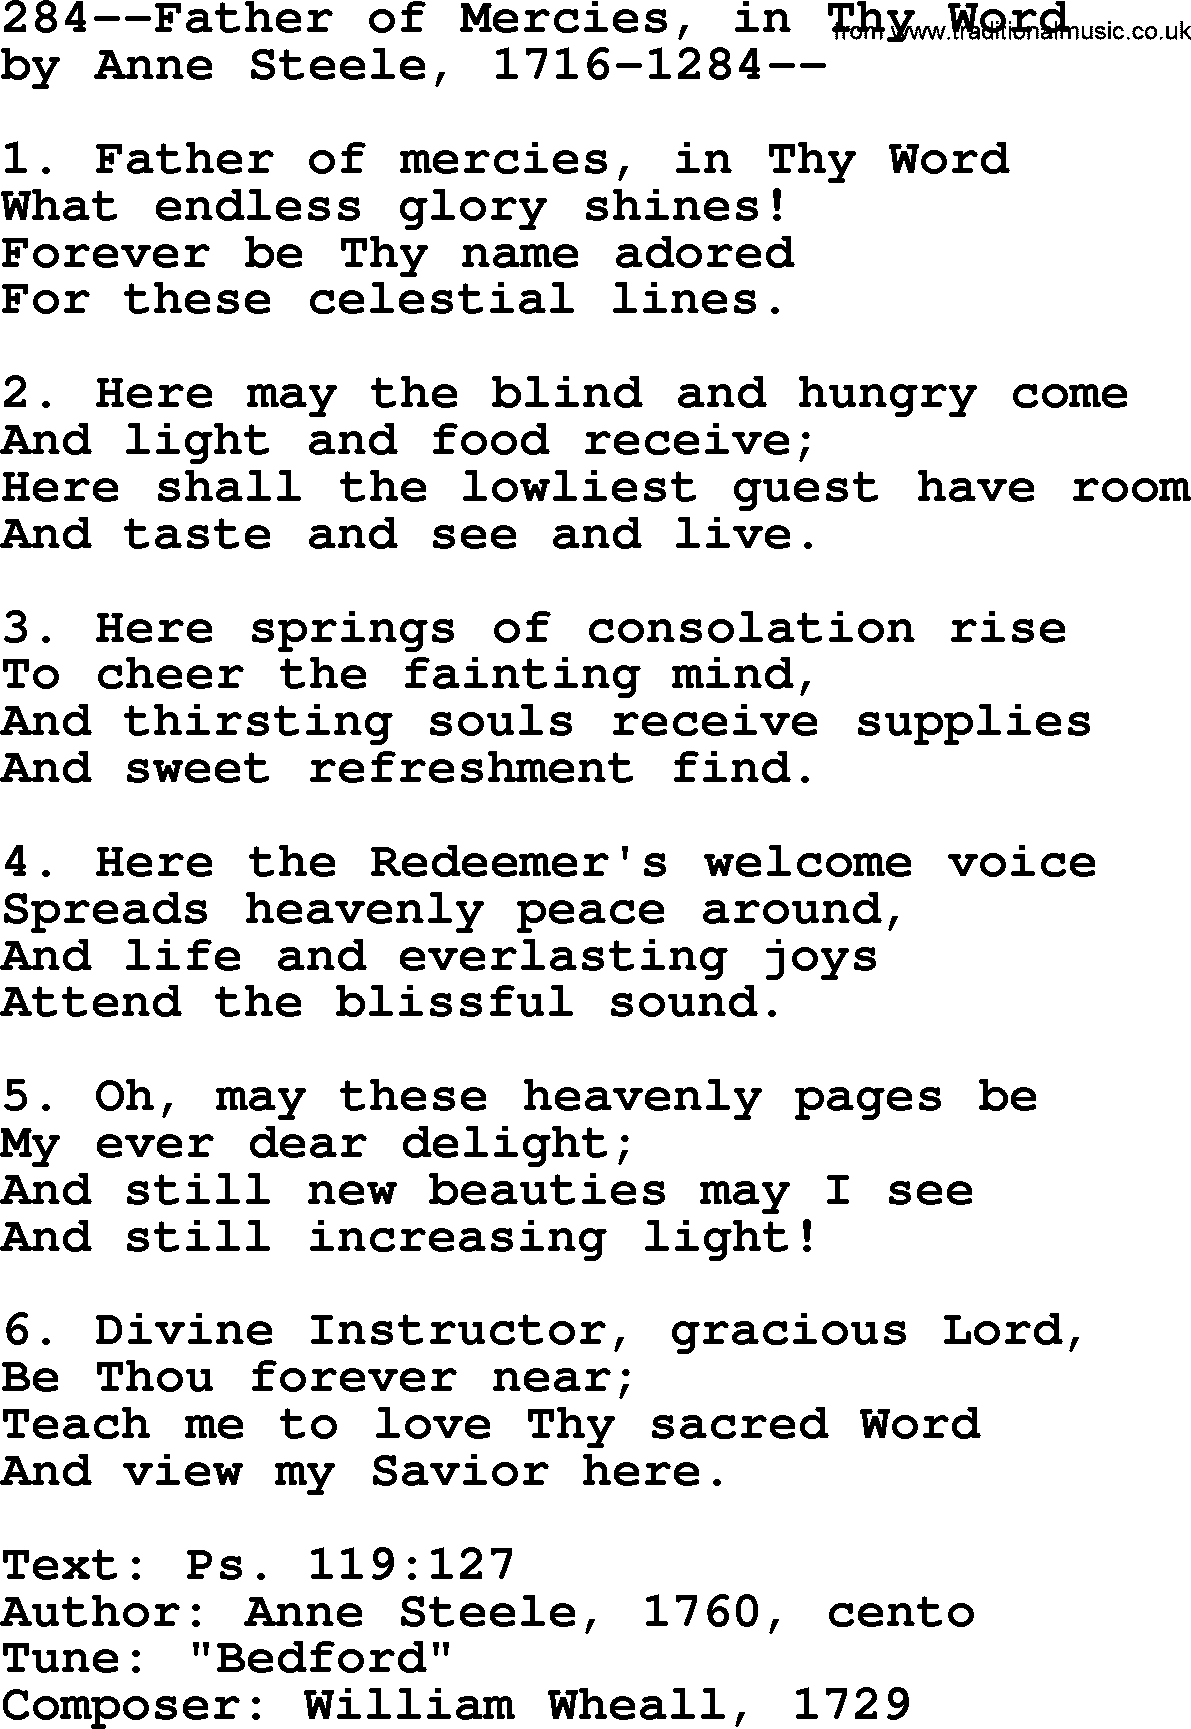 Lutheran Hymn: 284--Father of Mercies, in Thy Word.txt lyrics with PDF